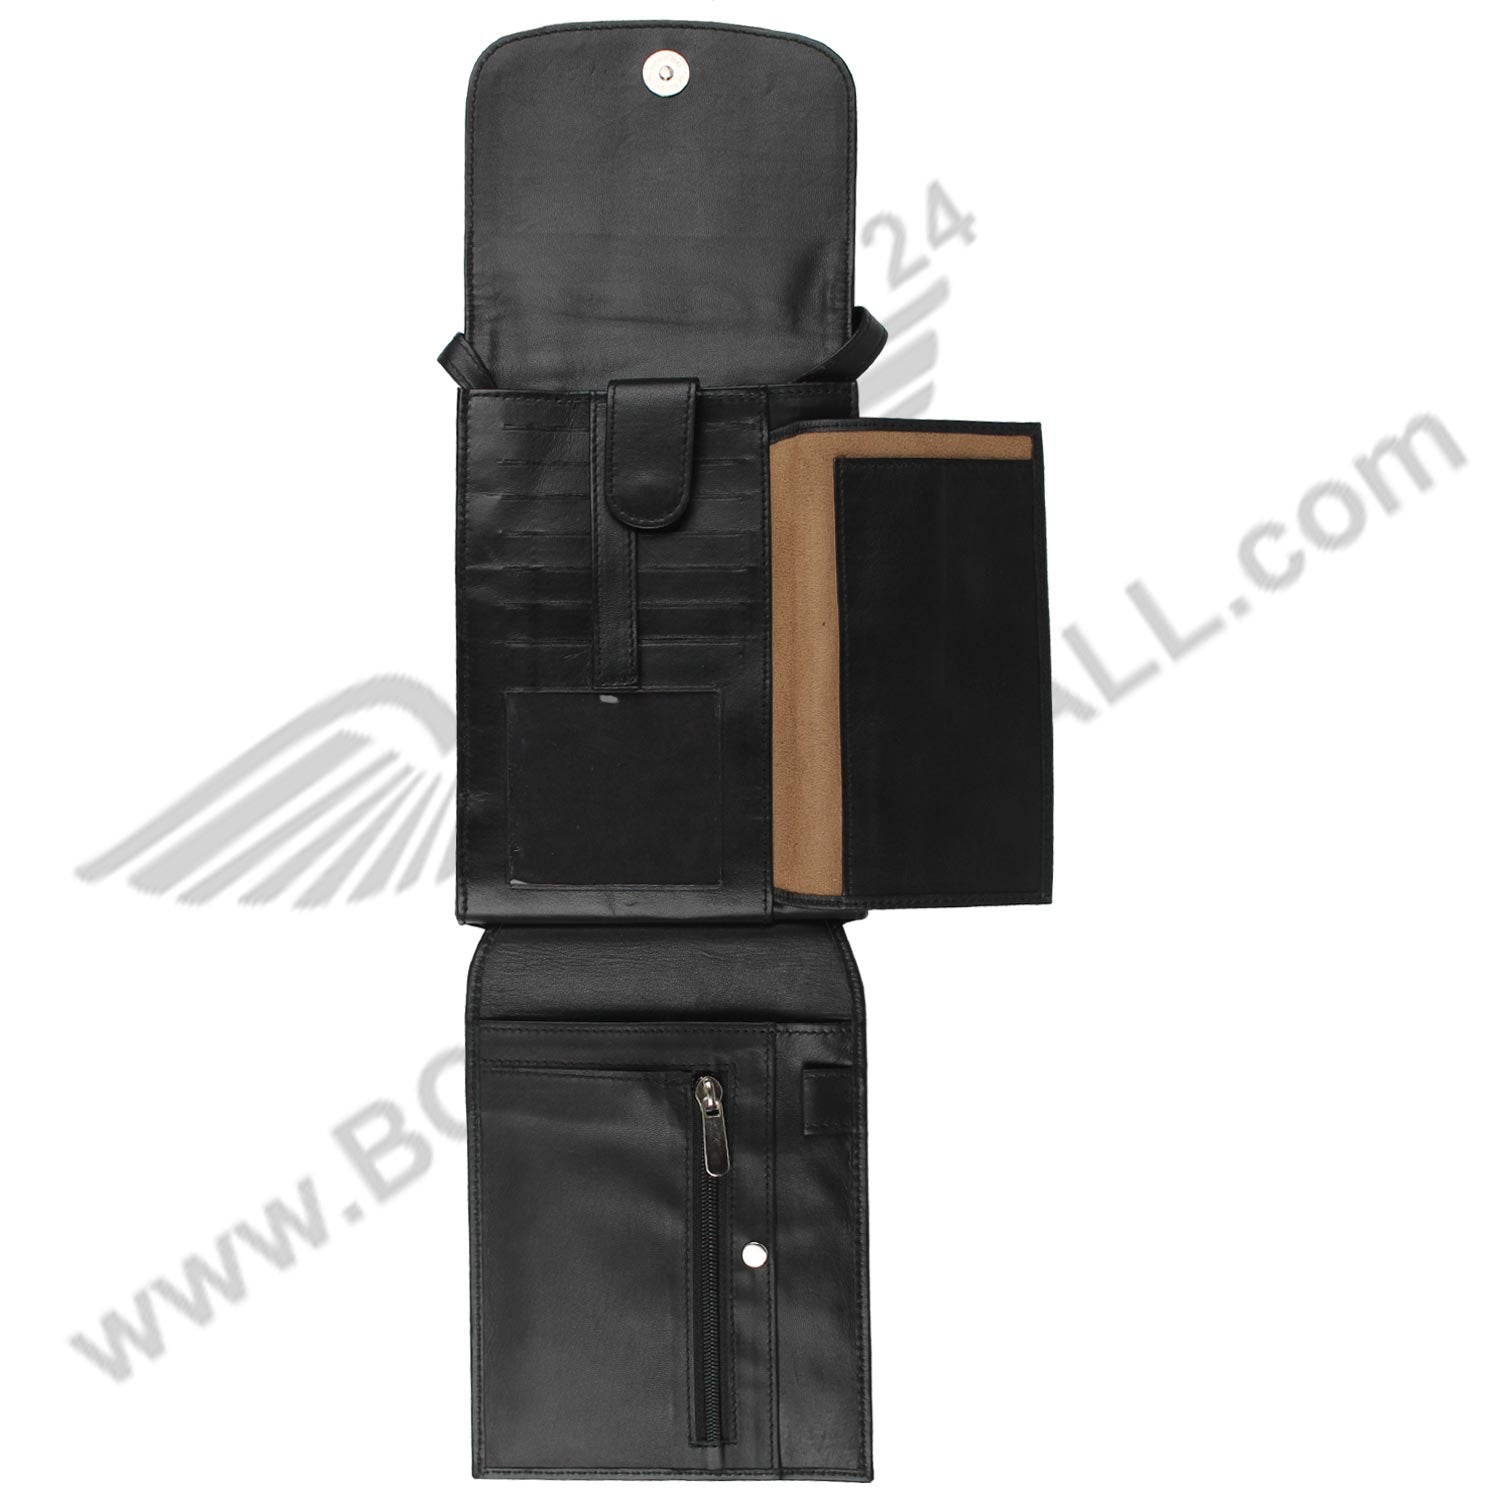 Open image of black MULTI POCKET CROSS BODY HAND BAG. It is depicting multiple pockets.